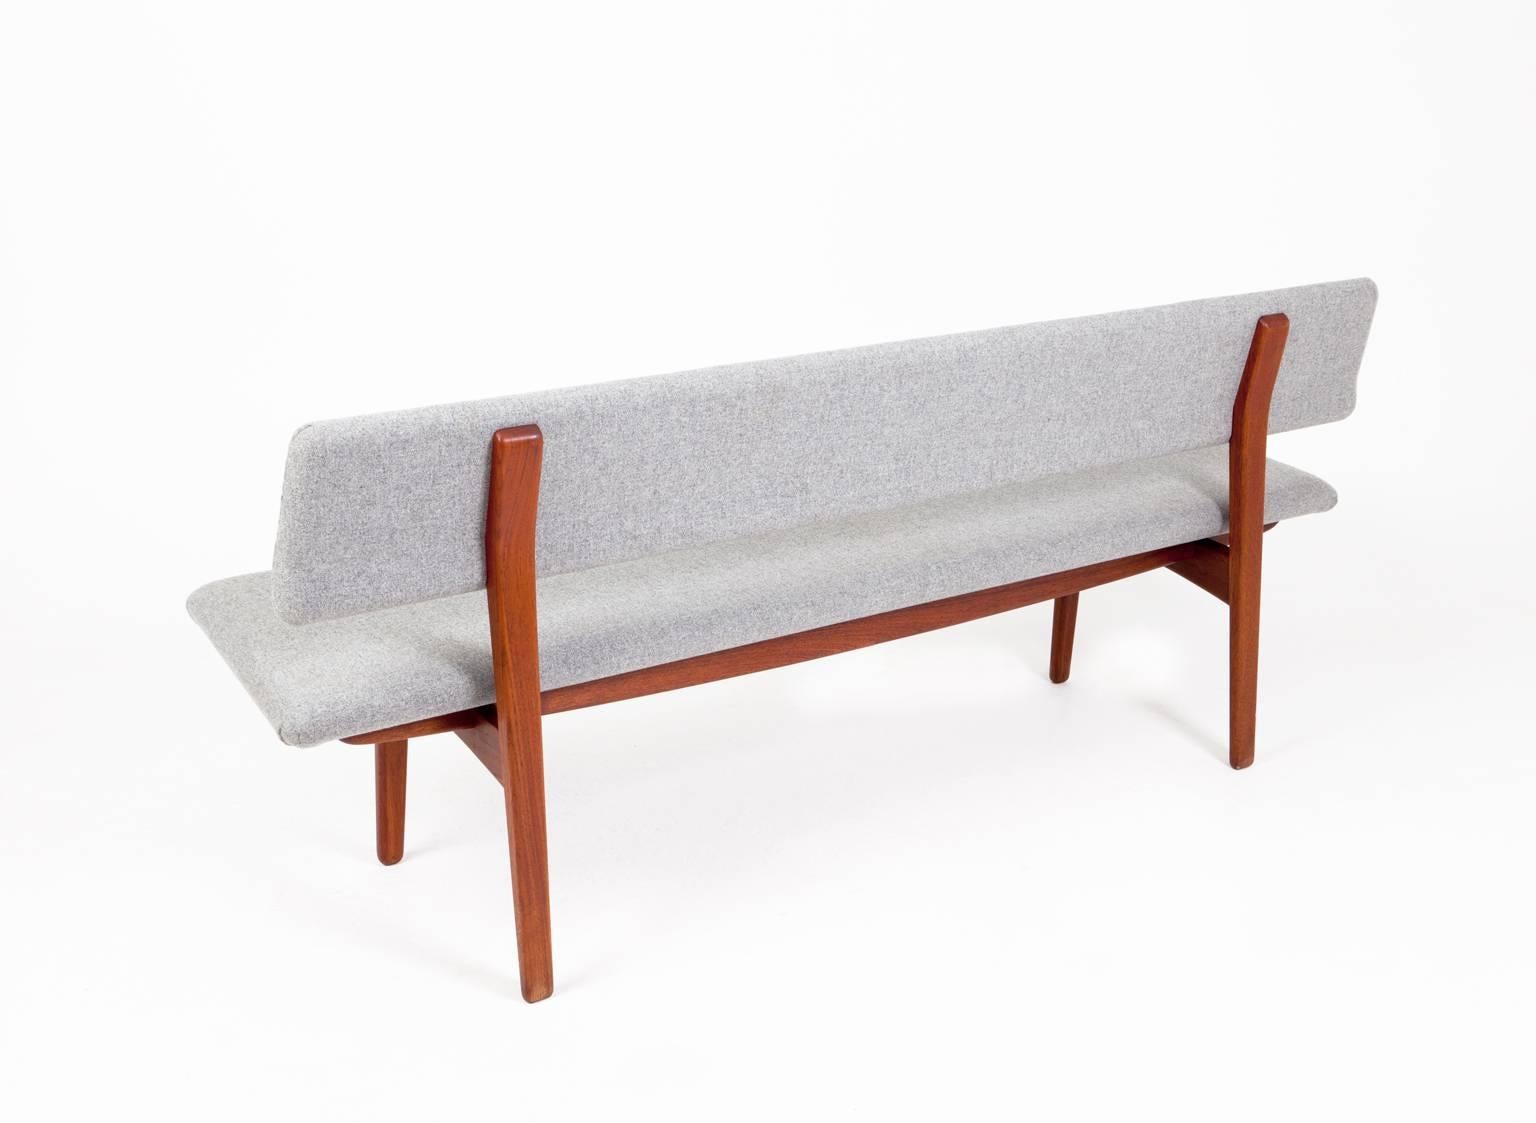 Ejnar Larsen & Axel Bender Madsen.

Teak bench with seat and back upholstered in light-grey wool.

Designed 1957.
Produced by Næstved Møbelfabrik.

